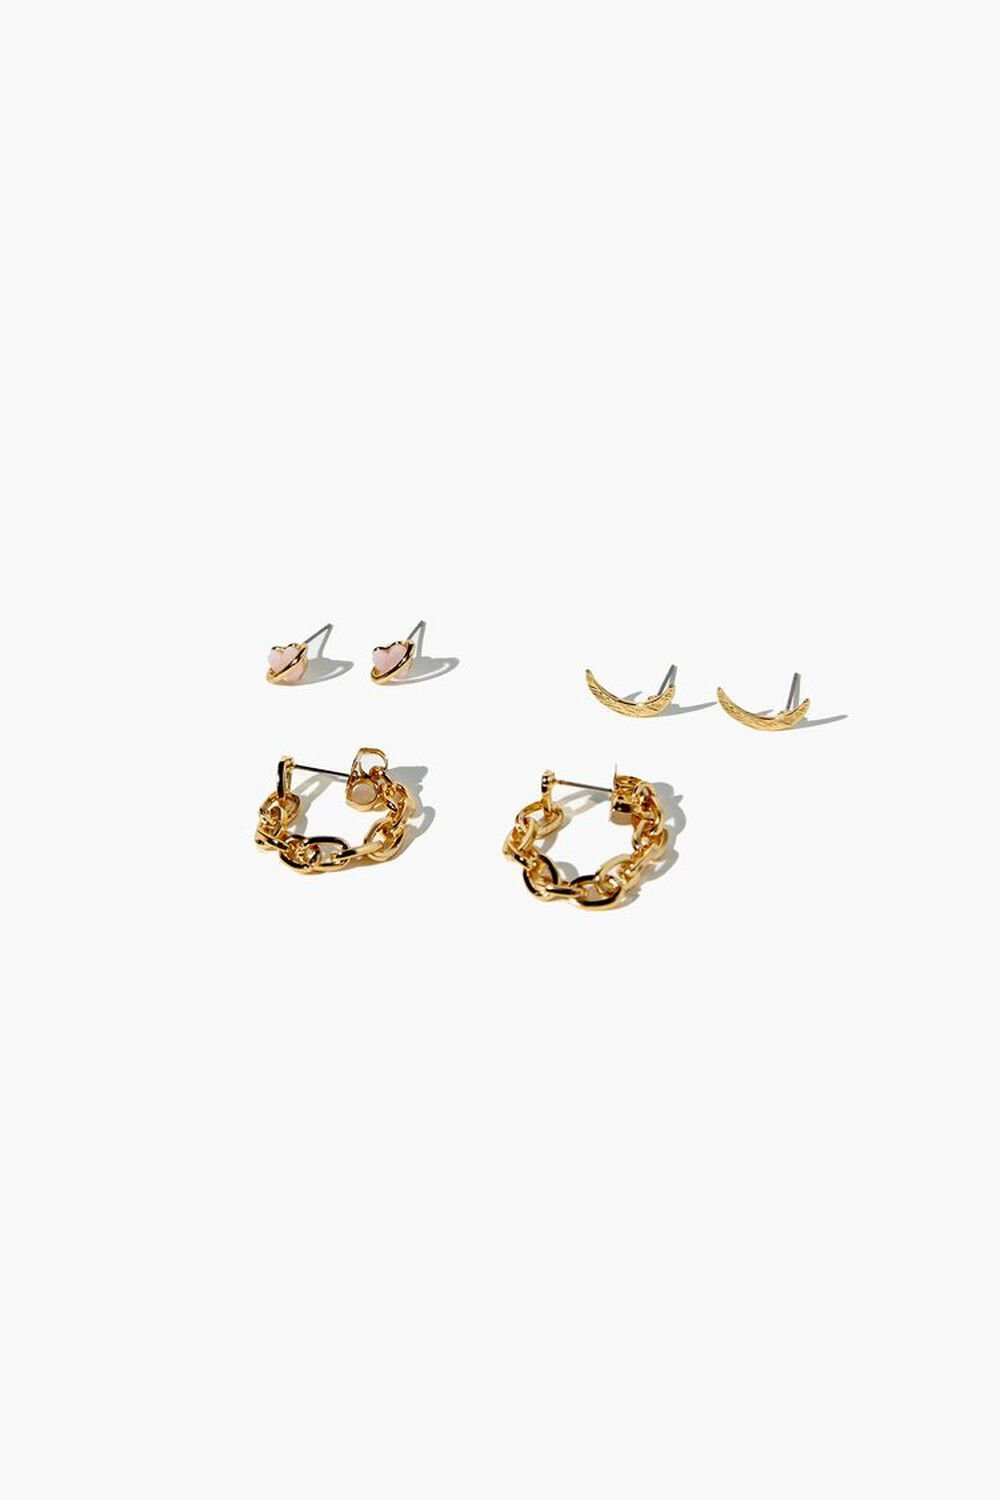 GOLD Heart Charm Stud & Hoop Earrings Set, image 1